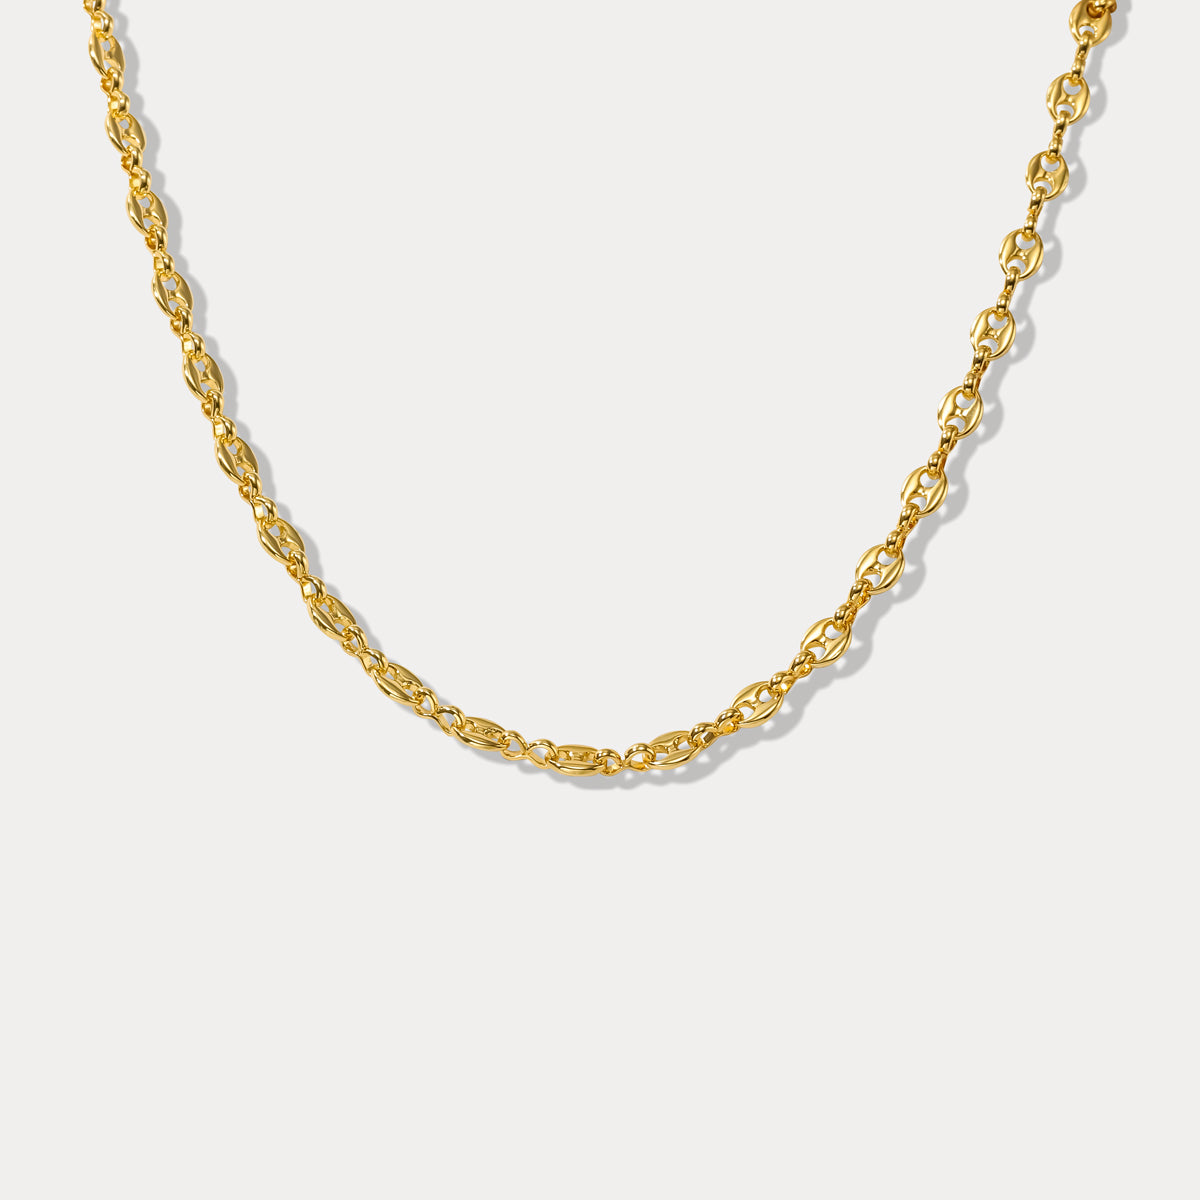 Selenichast gucci chain necklace